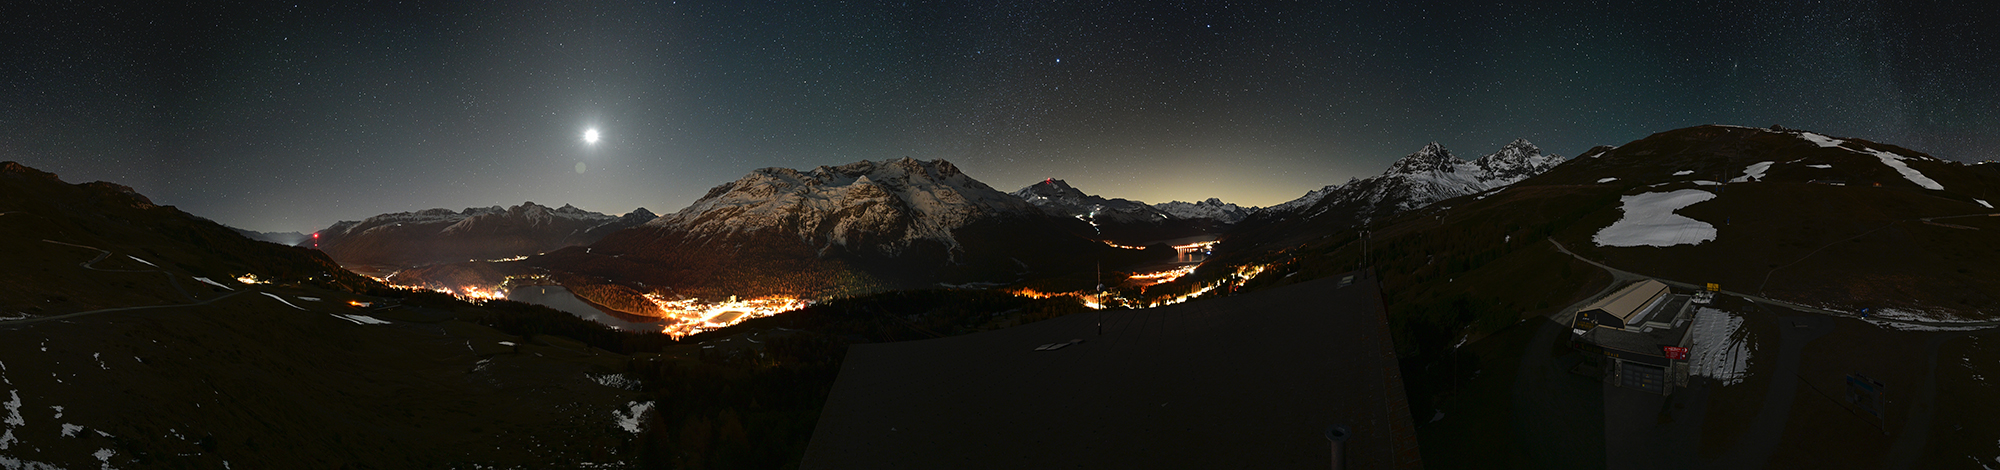 Panorama St.Moritz bei Nacht